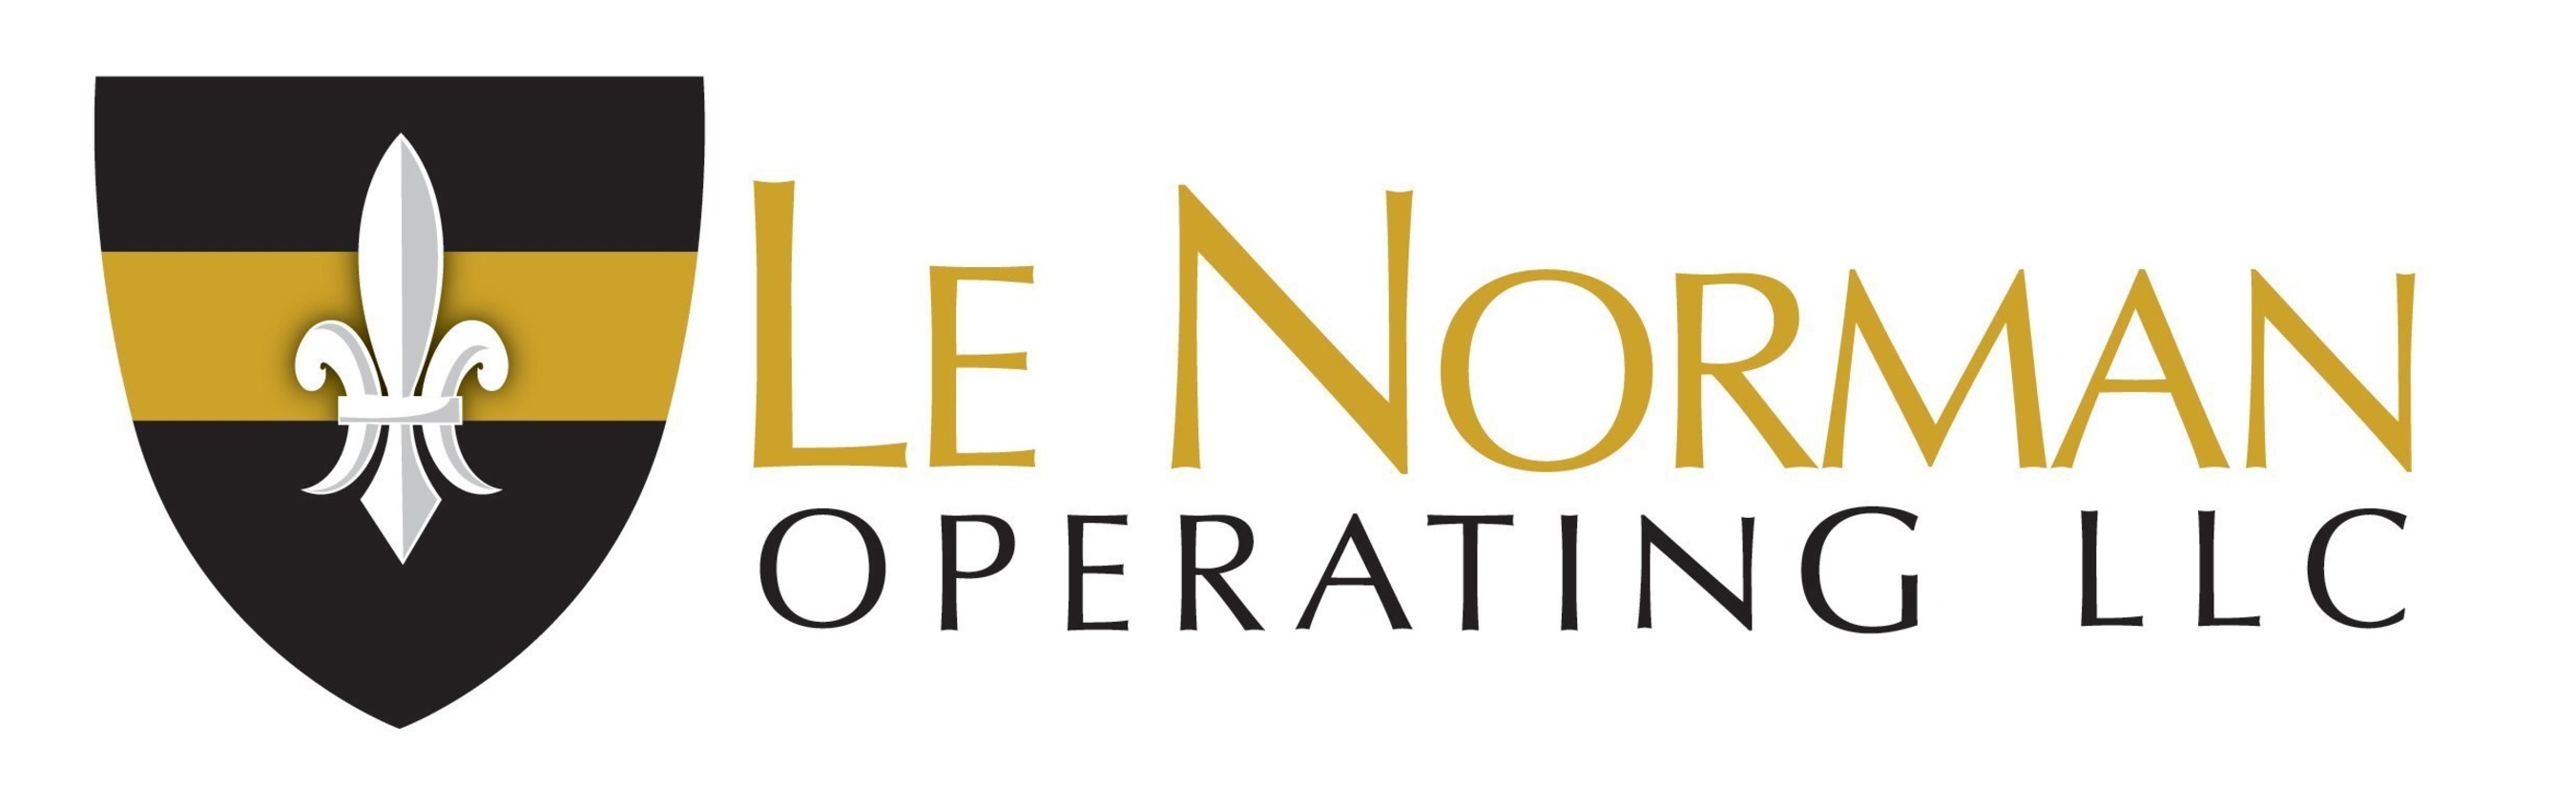 LE NORMAN OPERATING LLC logo (PRNewsFoto/Templar Energy LLC)